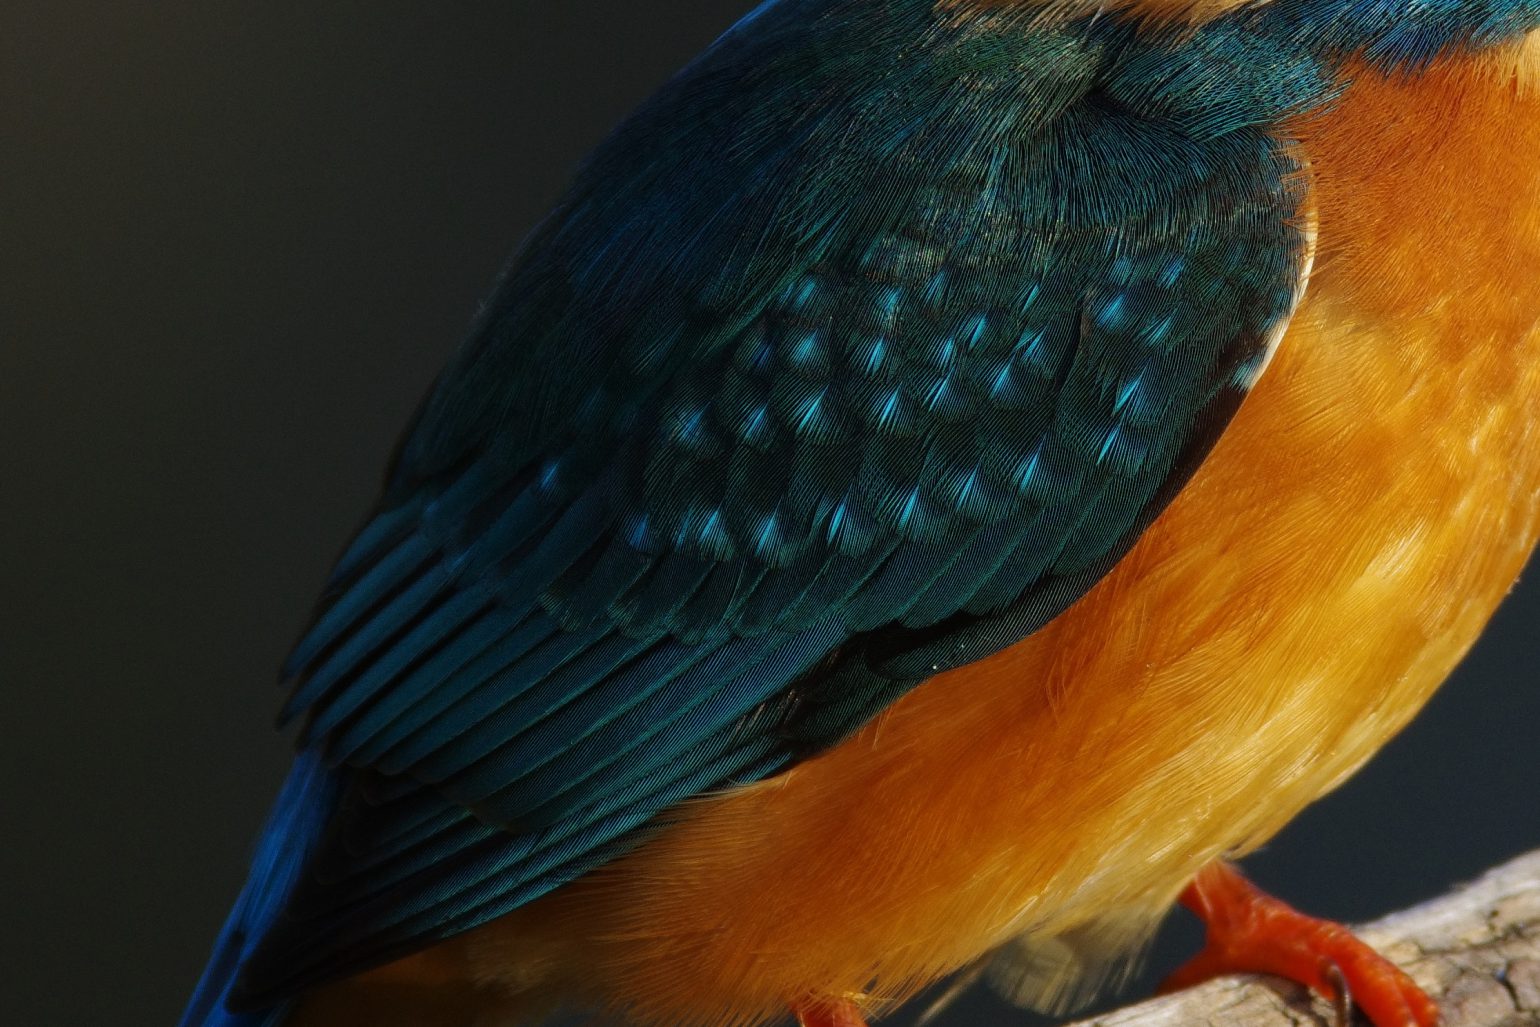 BORGで撮影した野鳥・カワセミの超高解像写真画像